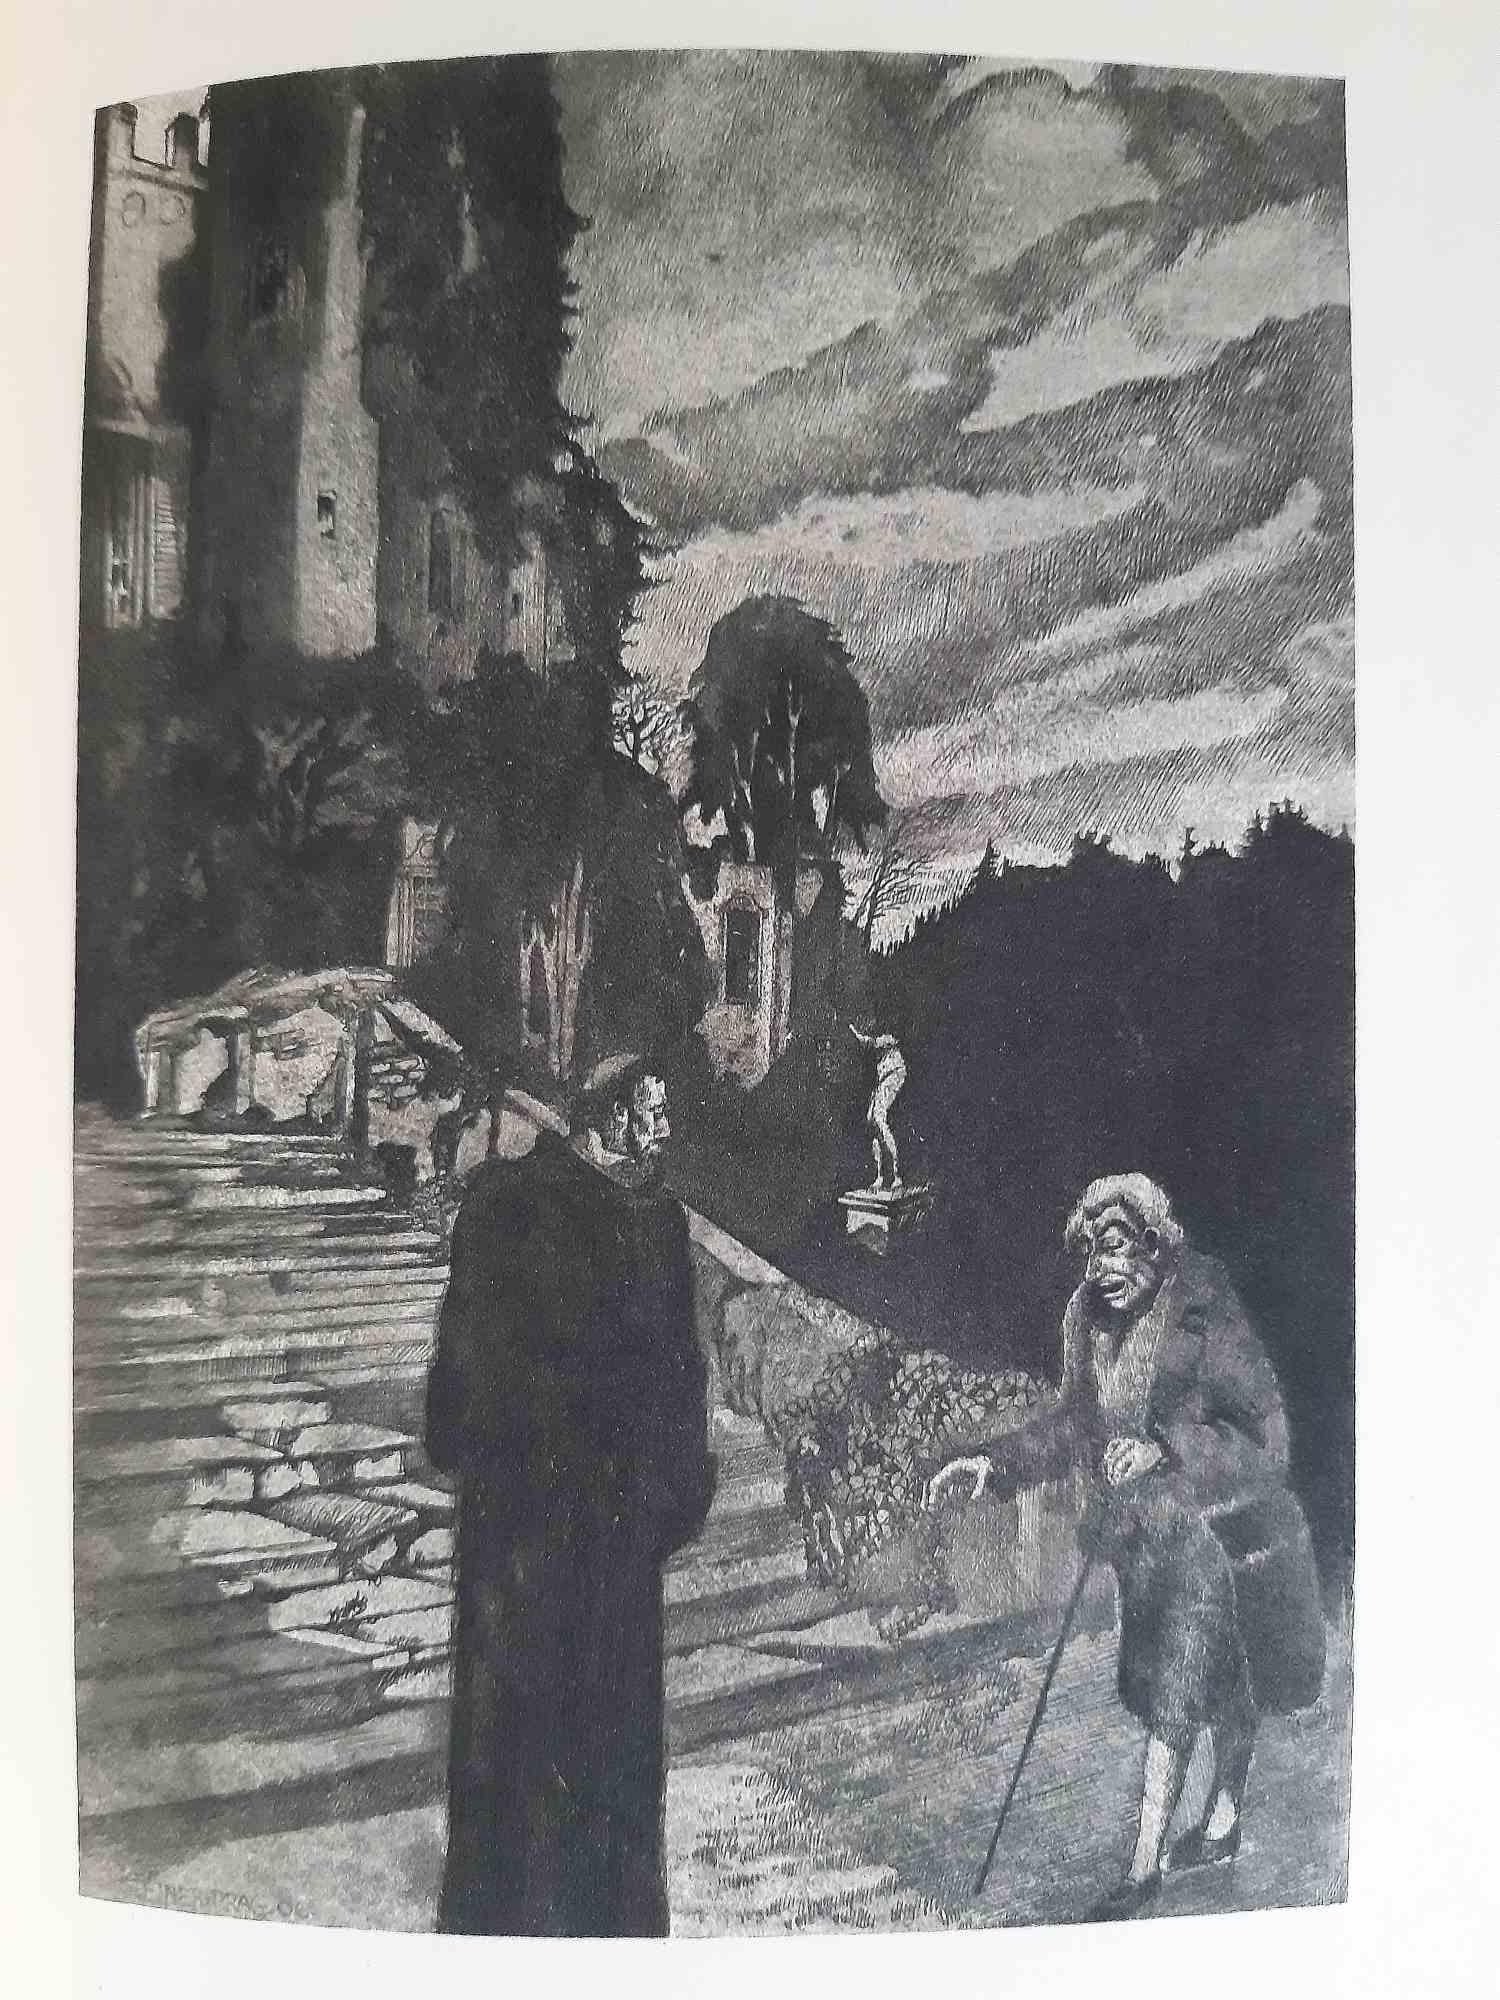 Die Elixiere des Teufels - Rare Book Illustrated by Hugo Steiner-Prag - 1907 For Sale 4